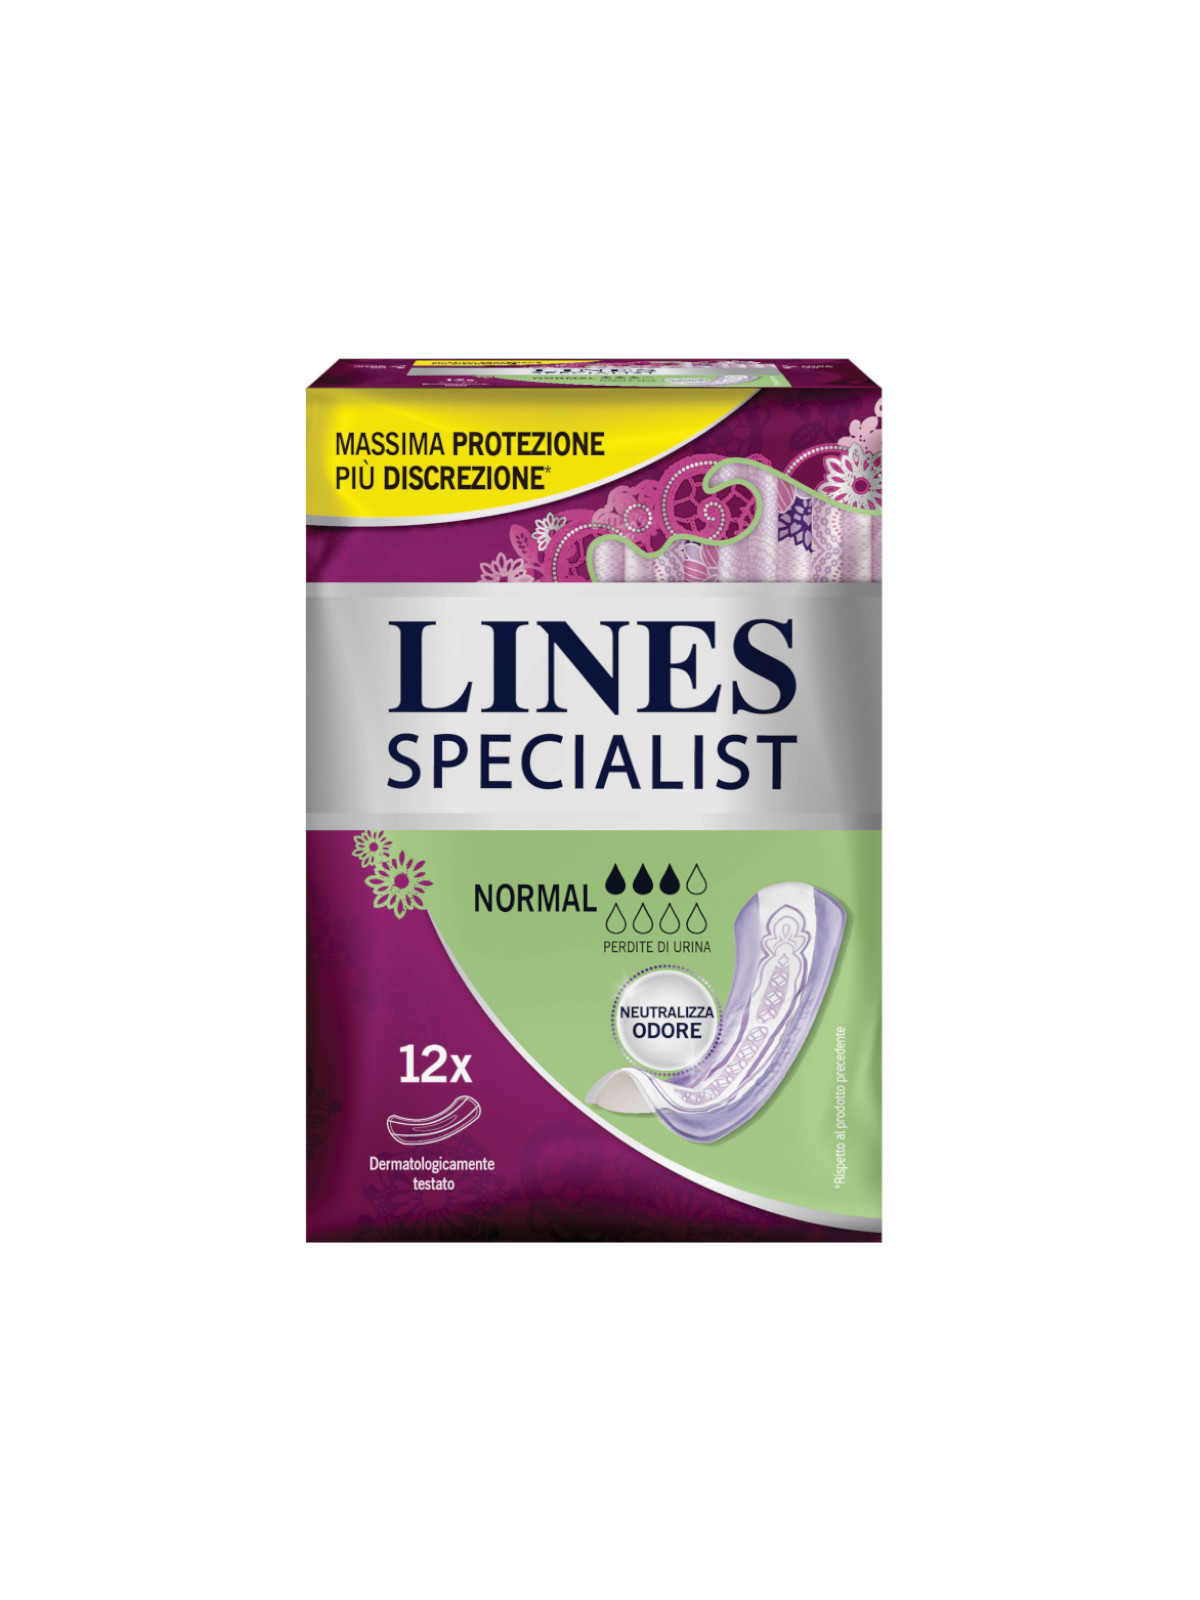 Lines specialist normal assorbenti per le perdite urinarie - 12 pz - Lines